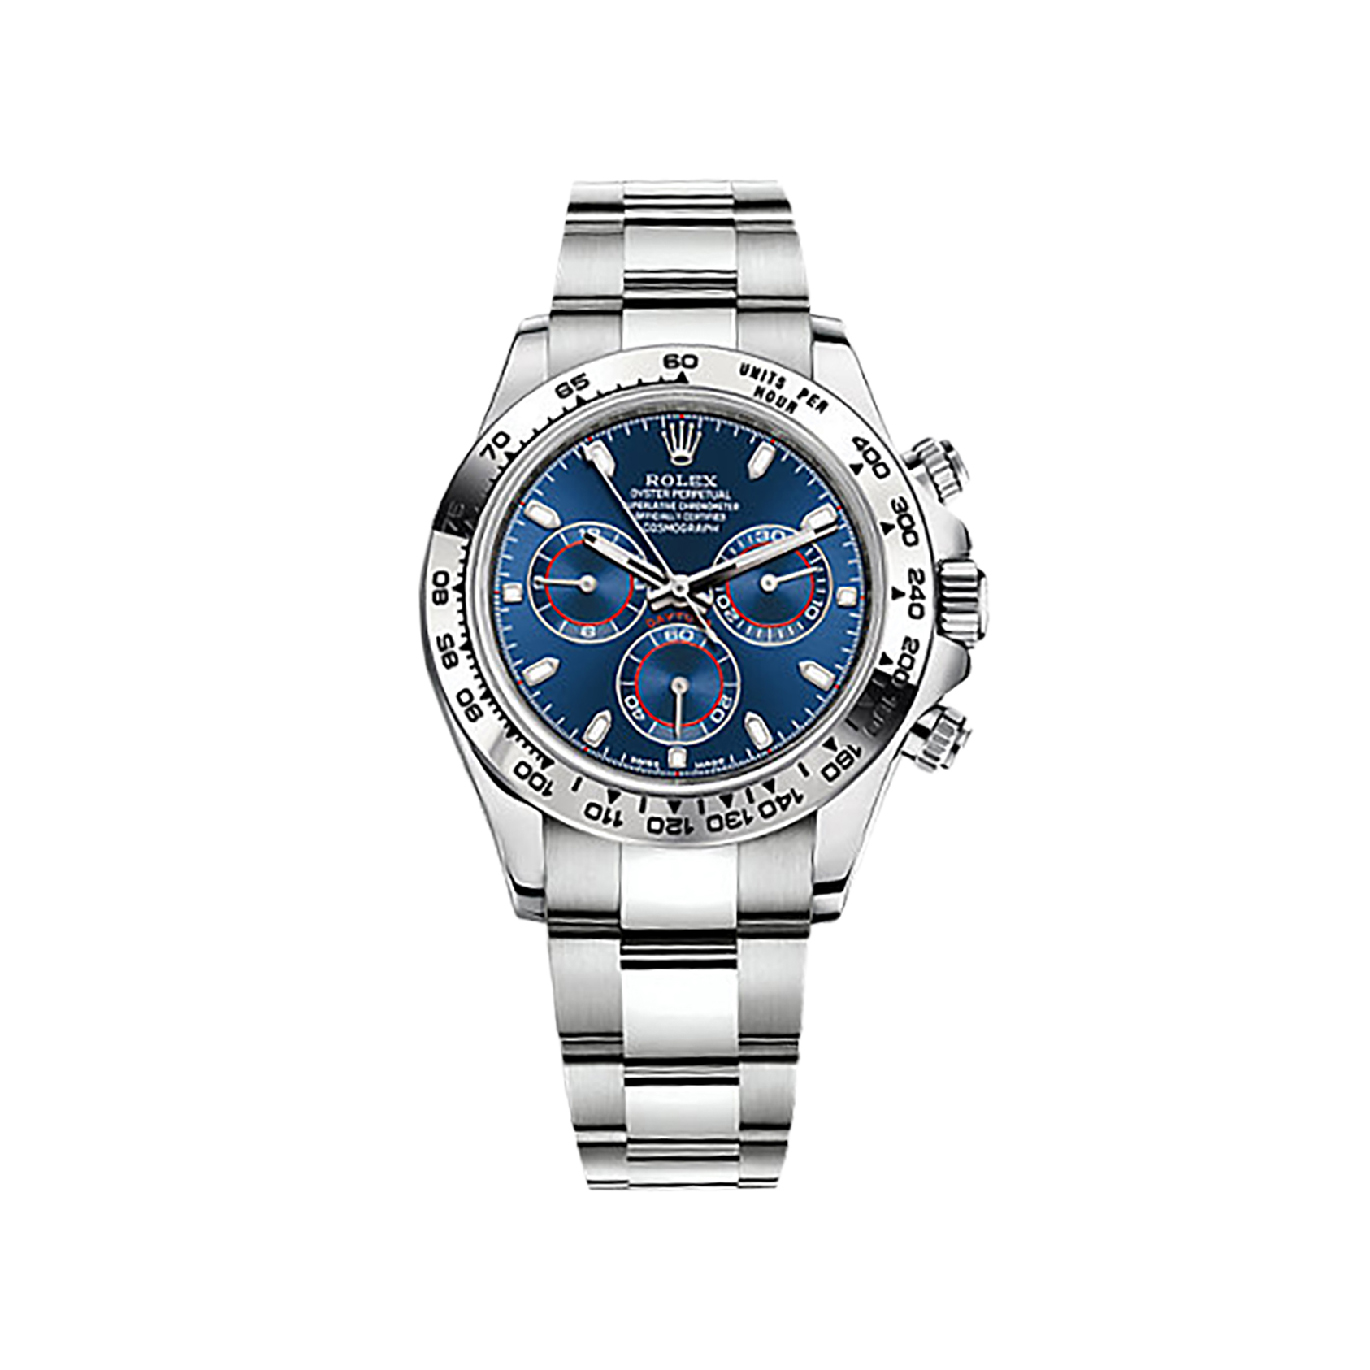 Cosmograph Daytona 116509 White Gold Watch (Blue)